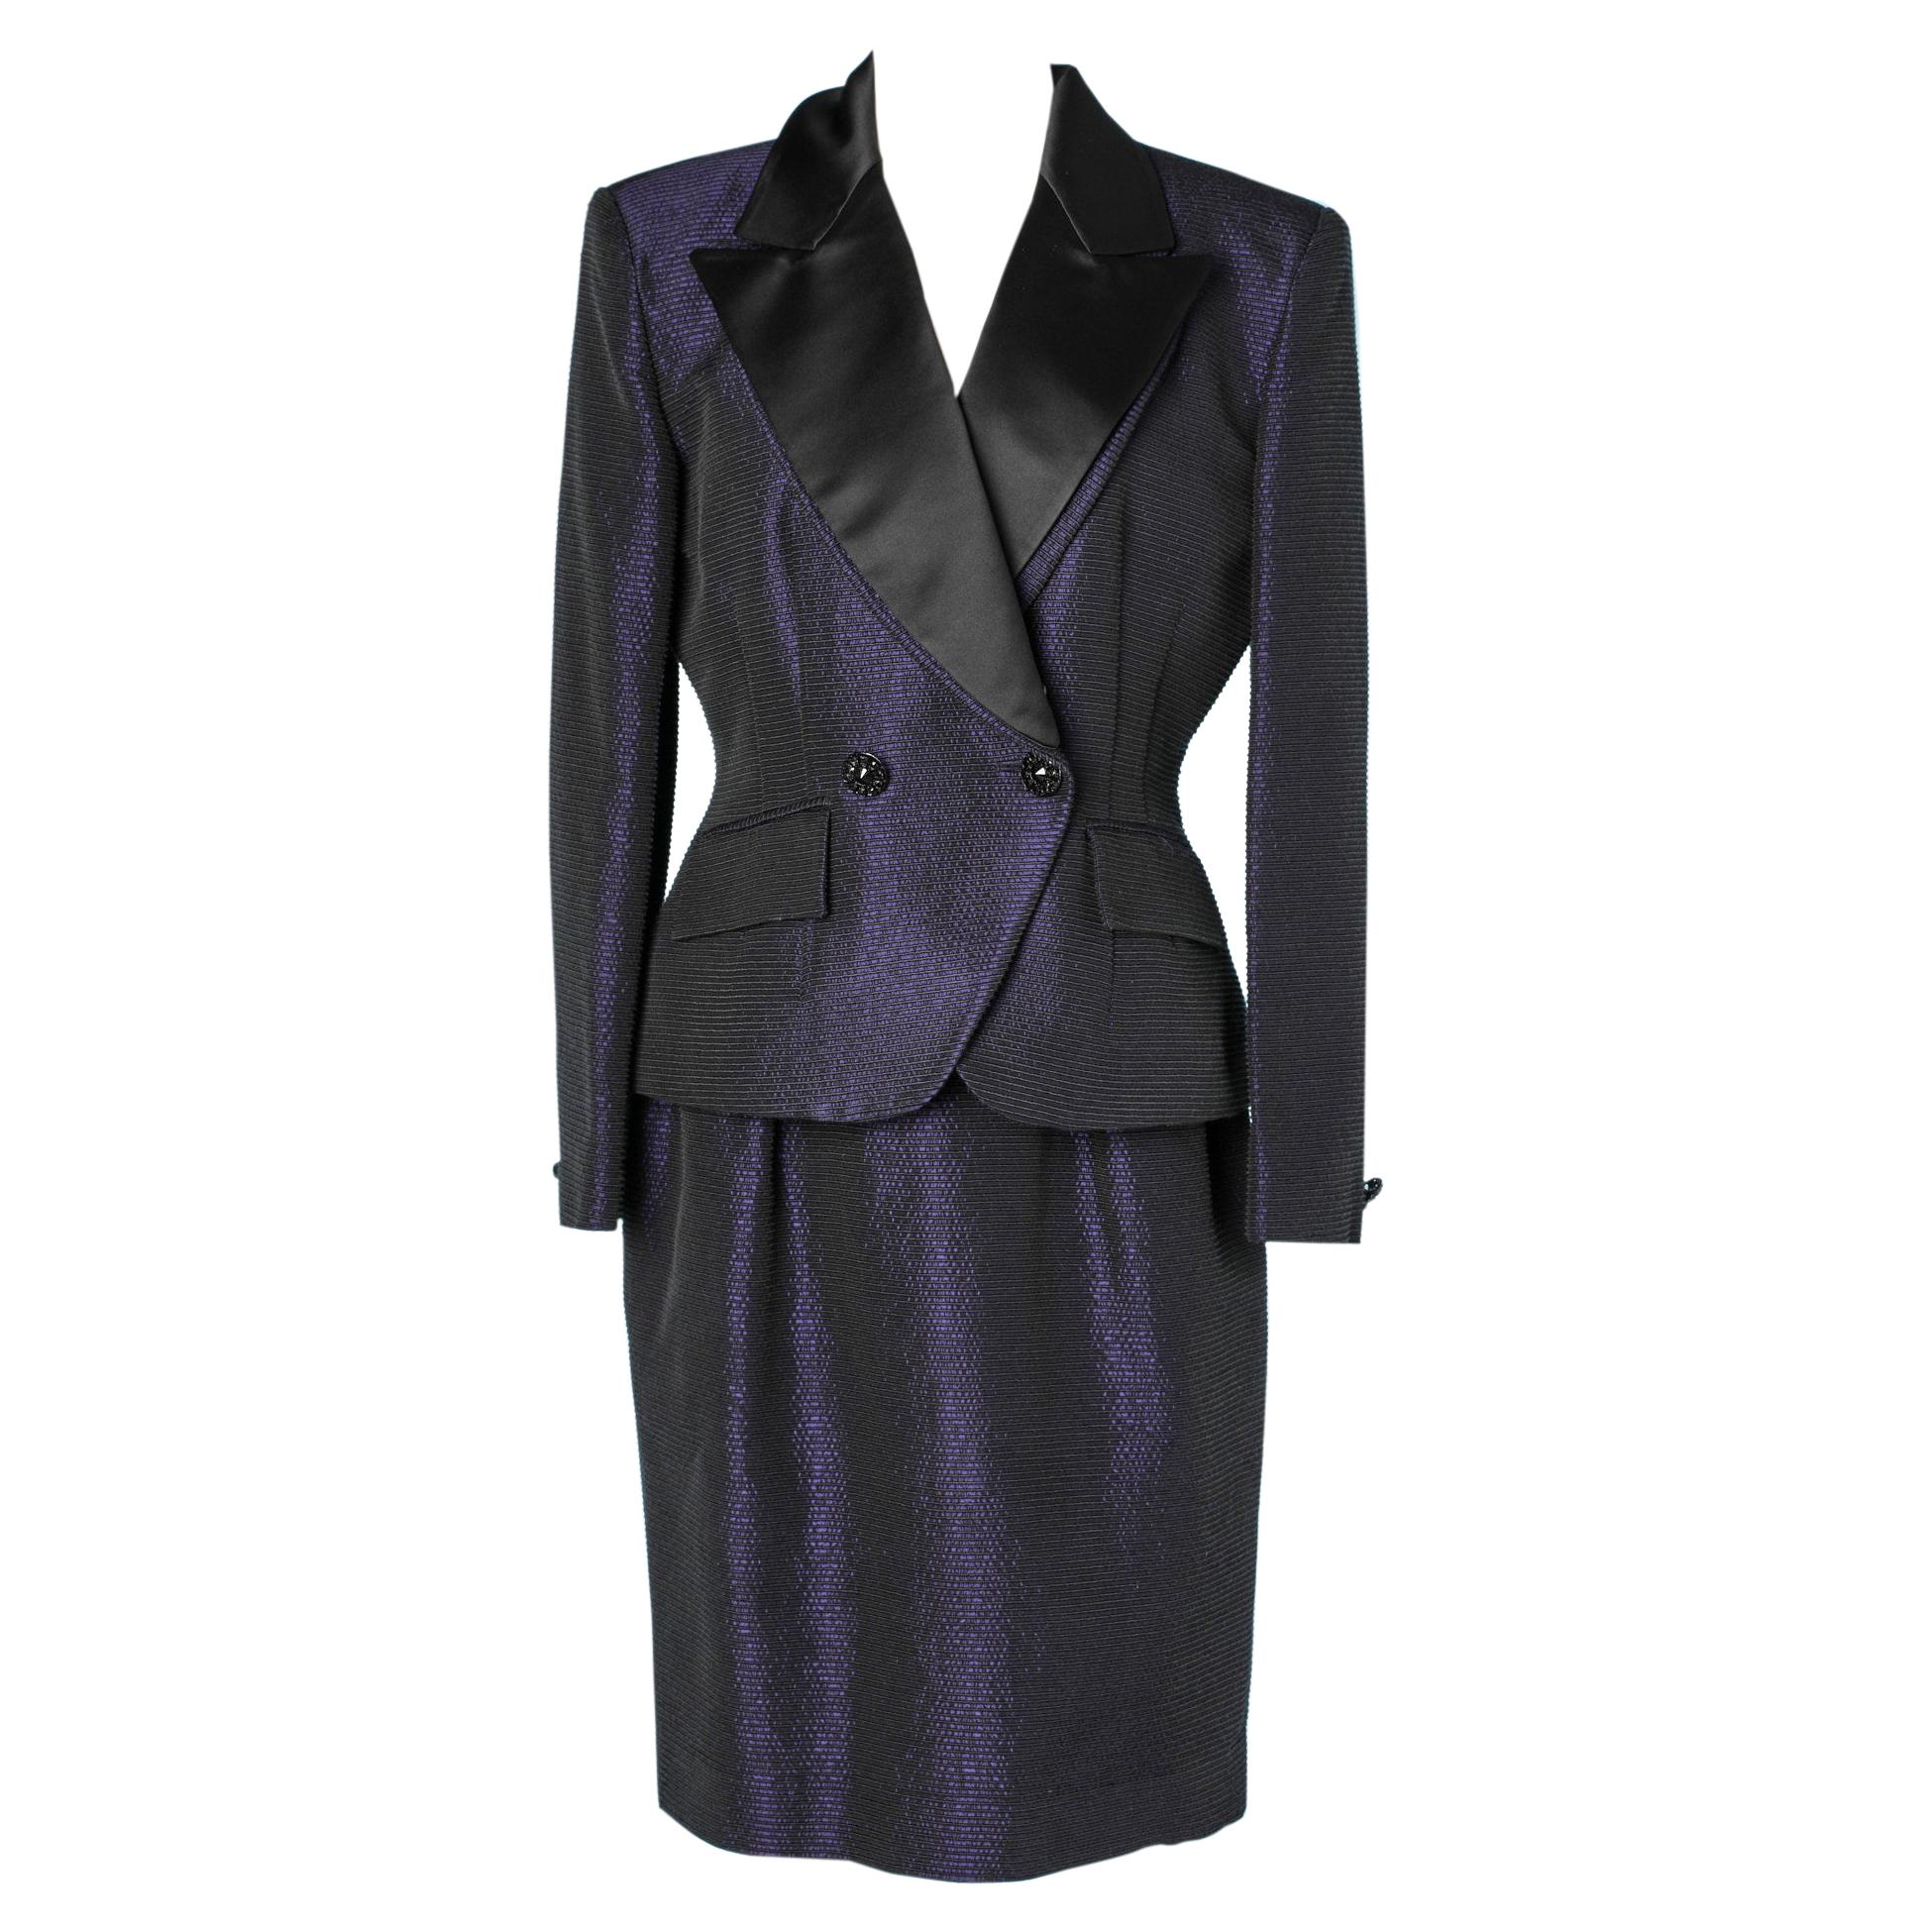 Christian Dior purple and black cocktail dress- suit 